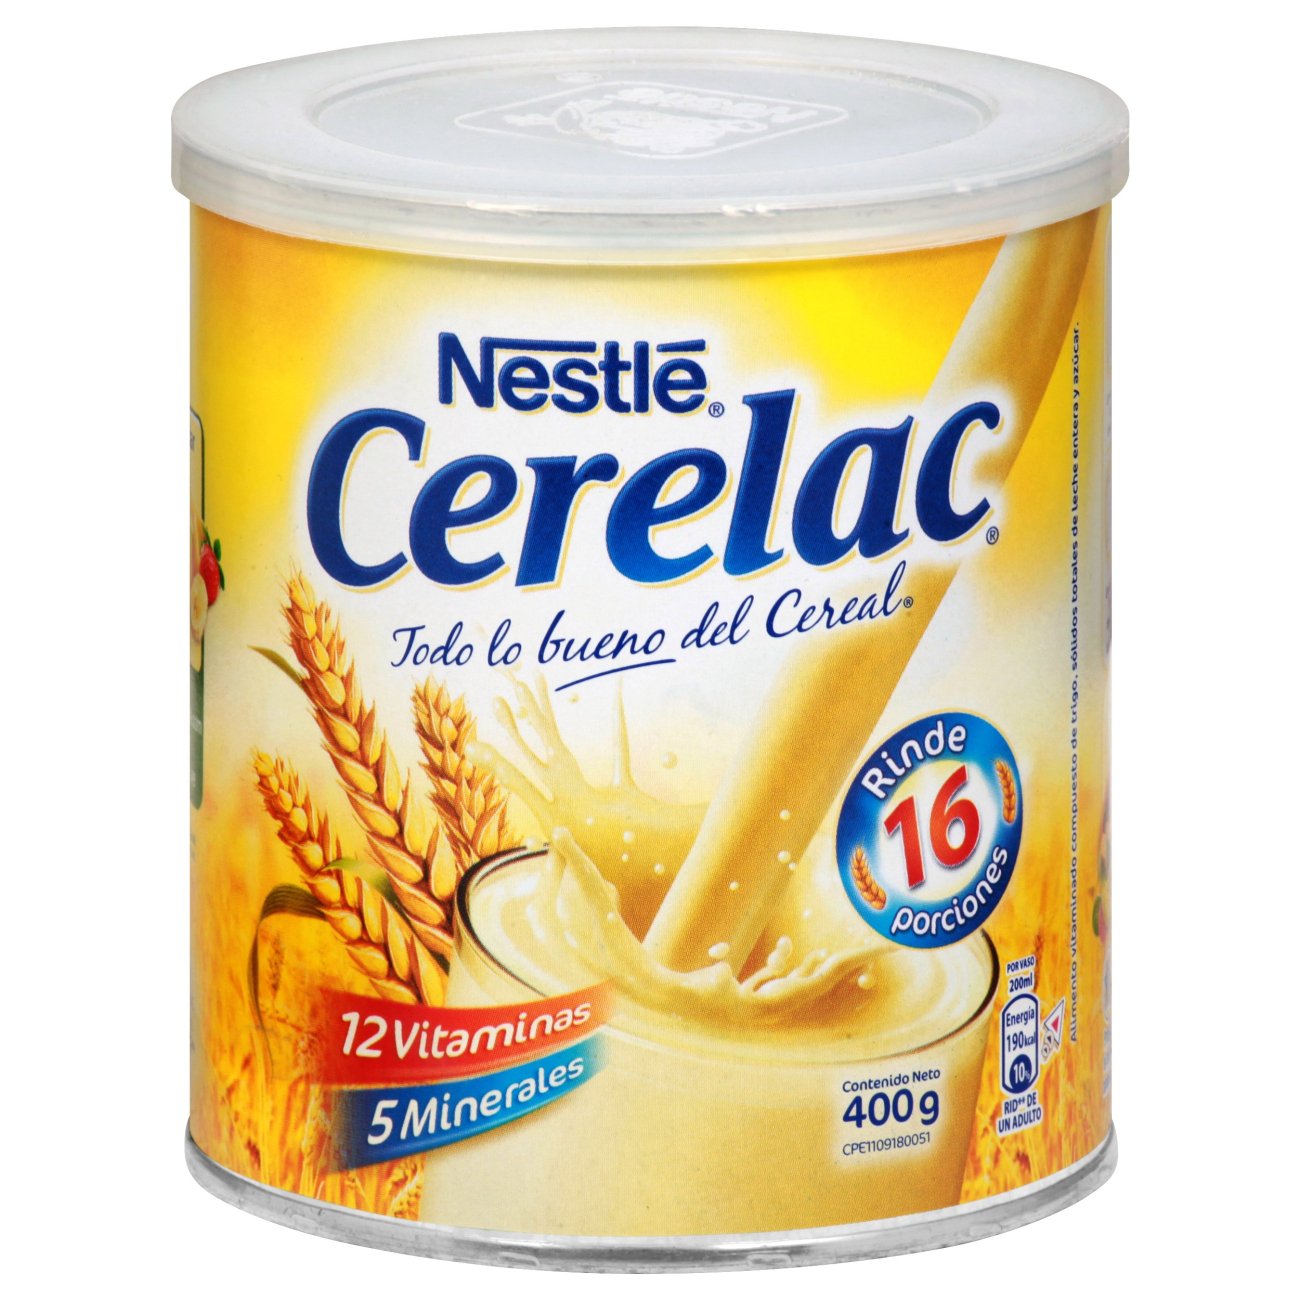 Nestle Cerelac - Shop Shakes & Smoothies at H-E-B